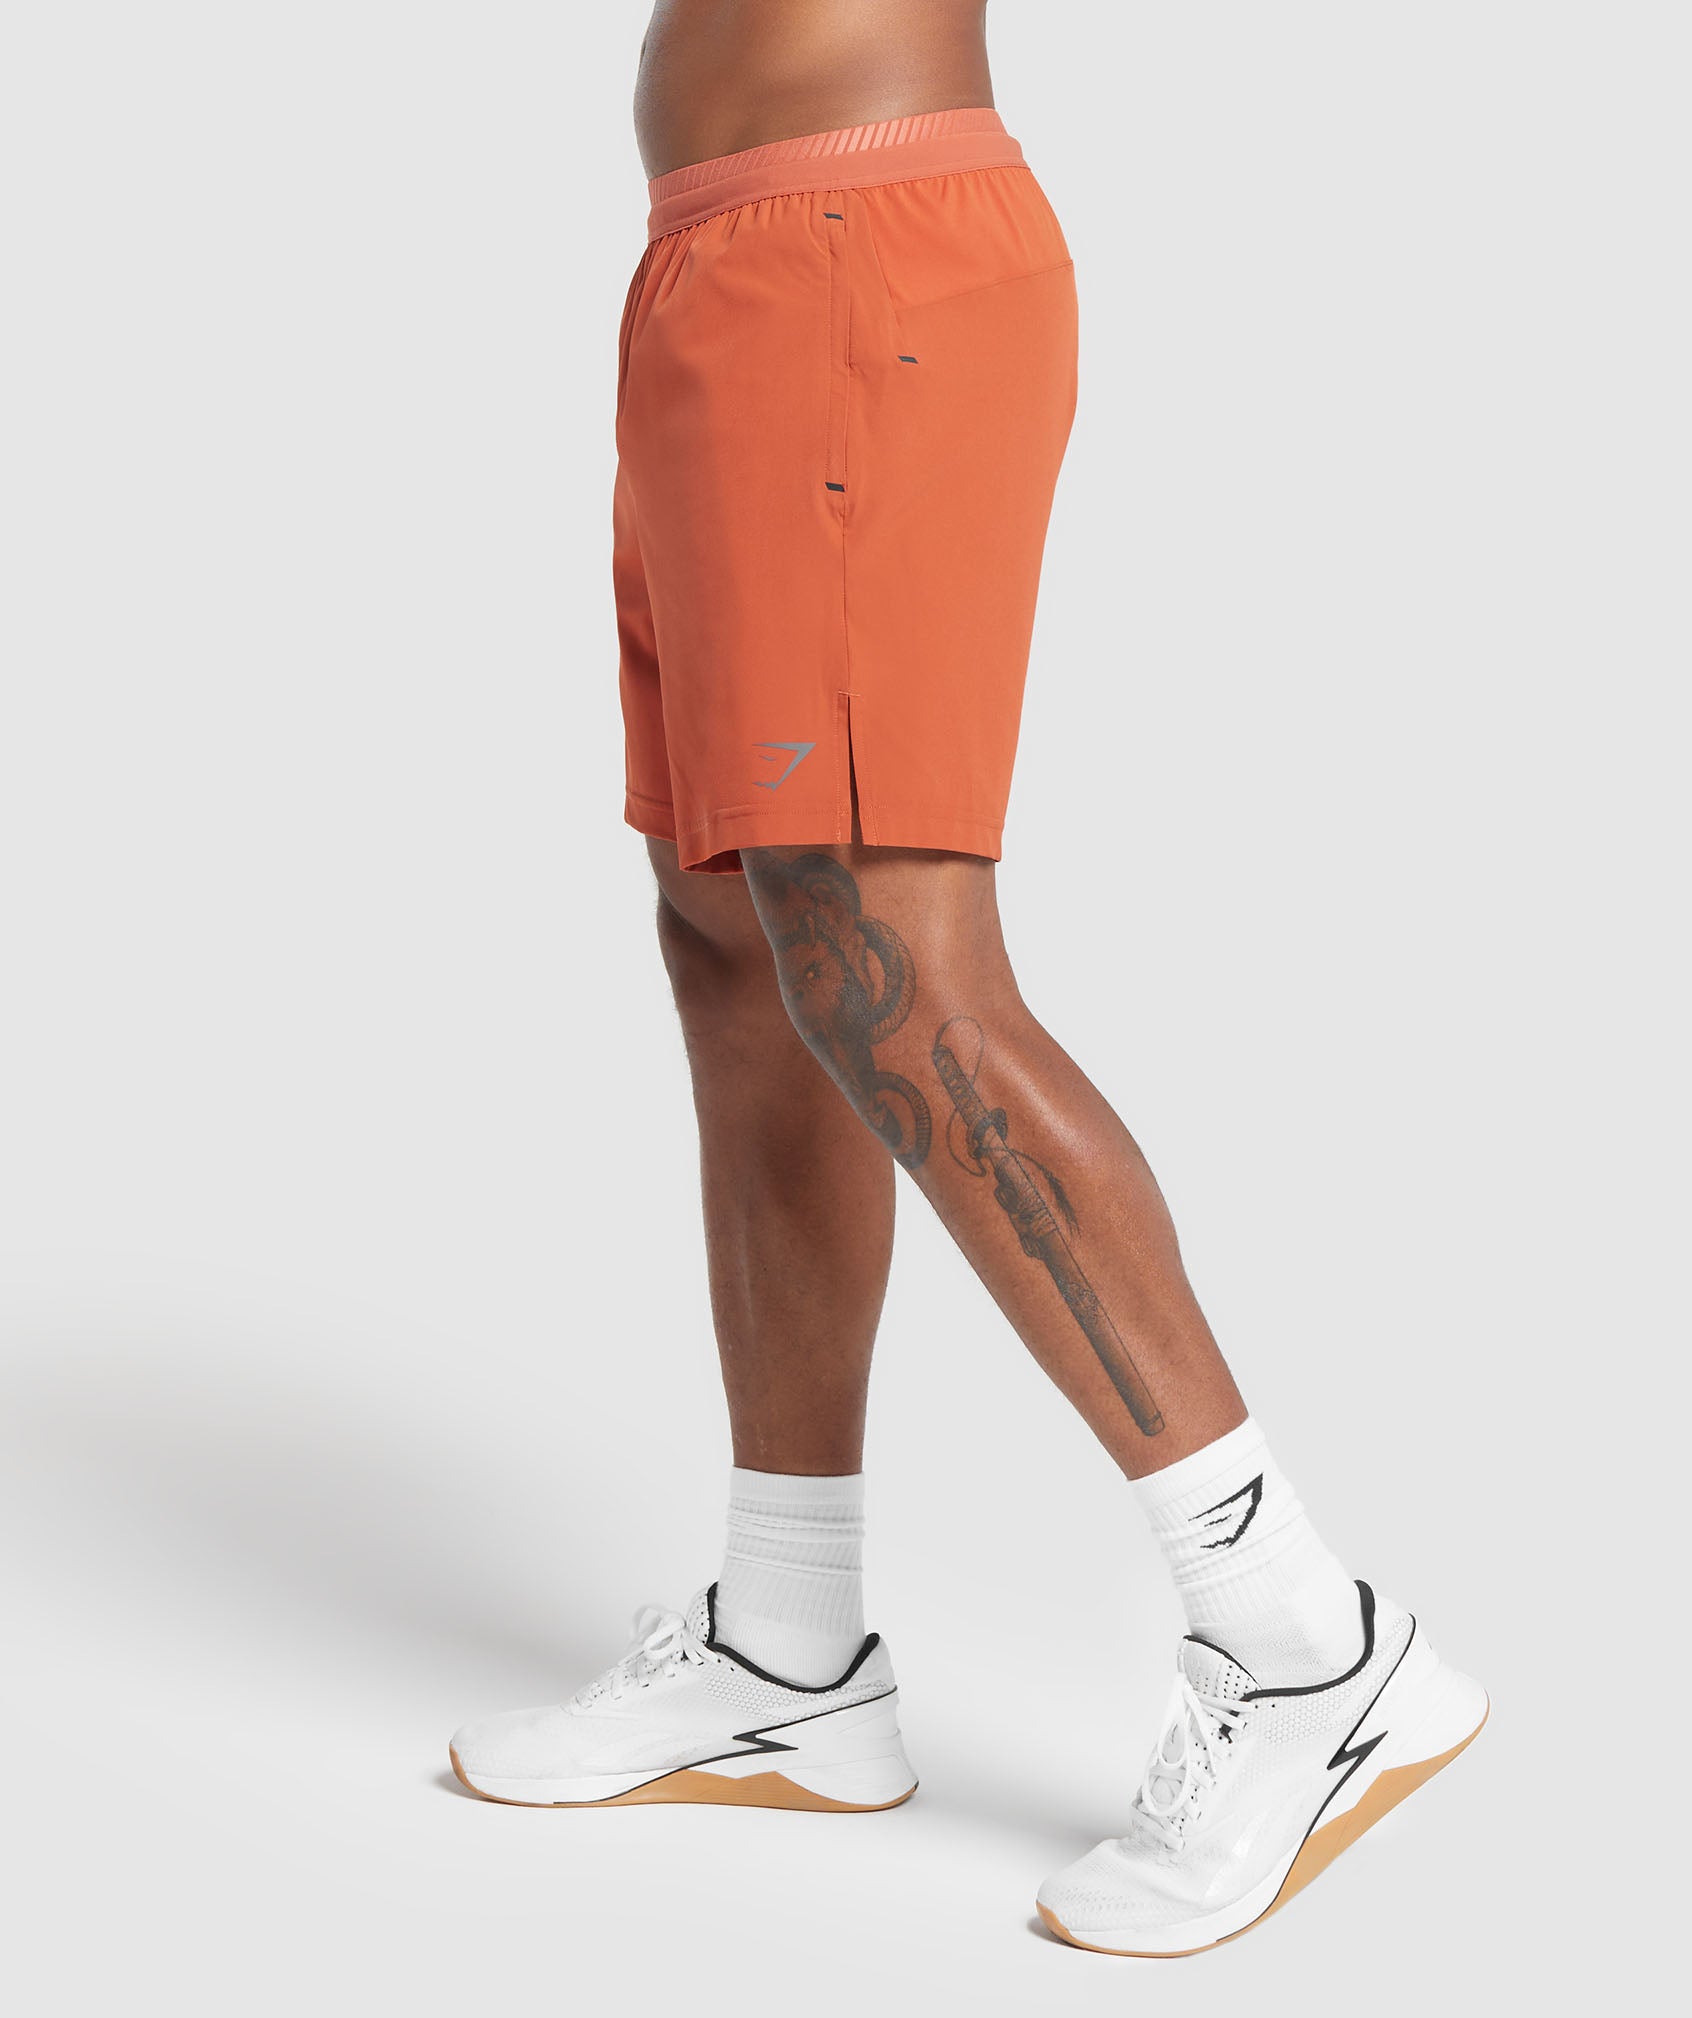 Apex 7" Hybrid Shorts in Rust Orange - view 3